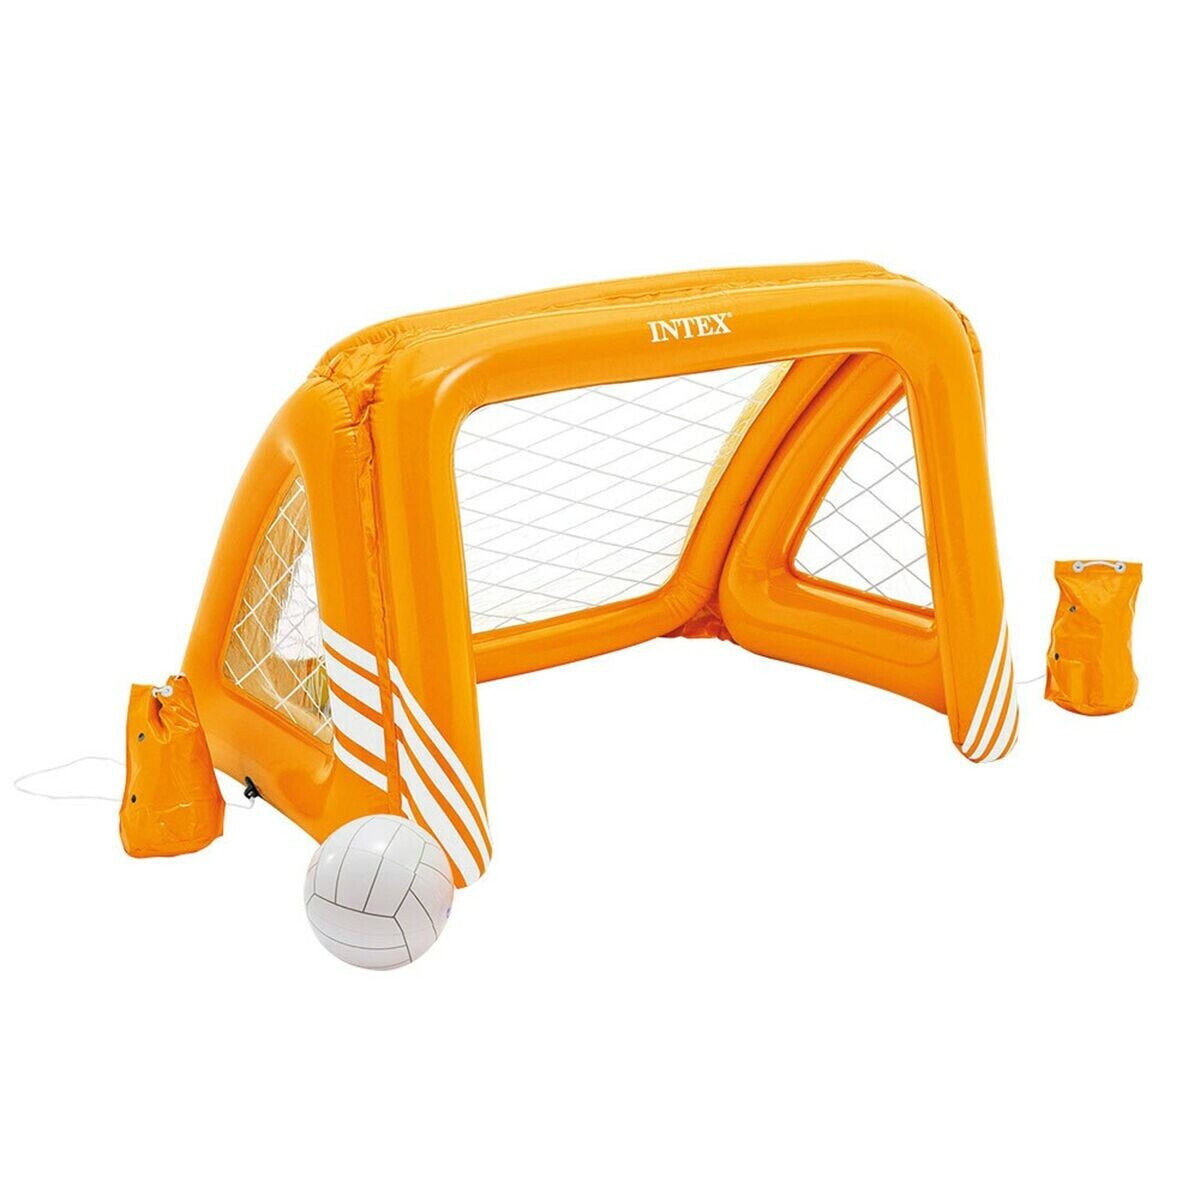 Inflatable Goal Intex 58507EP Orange